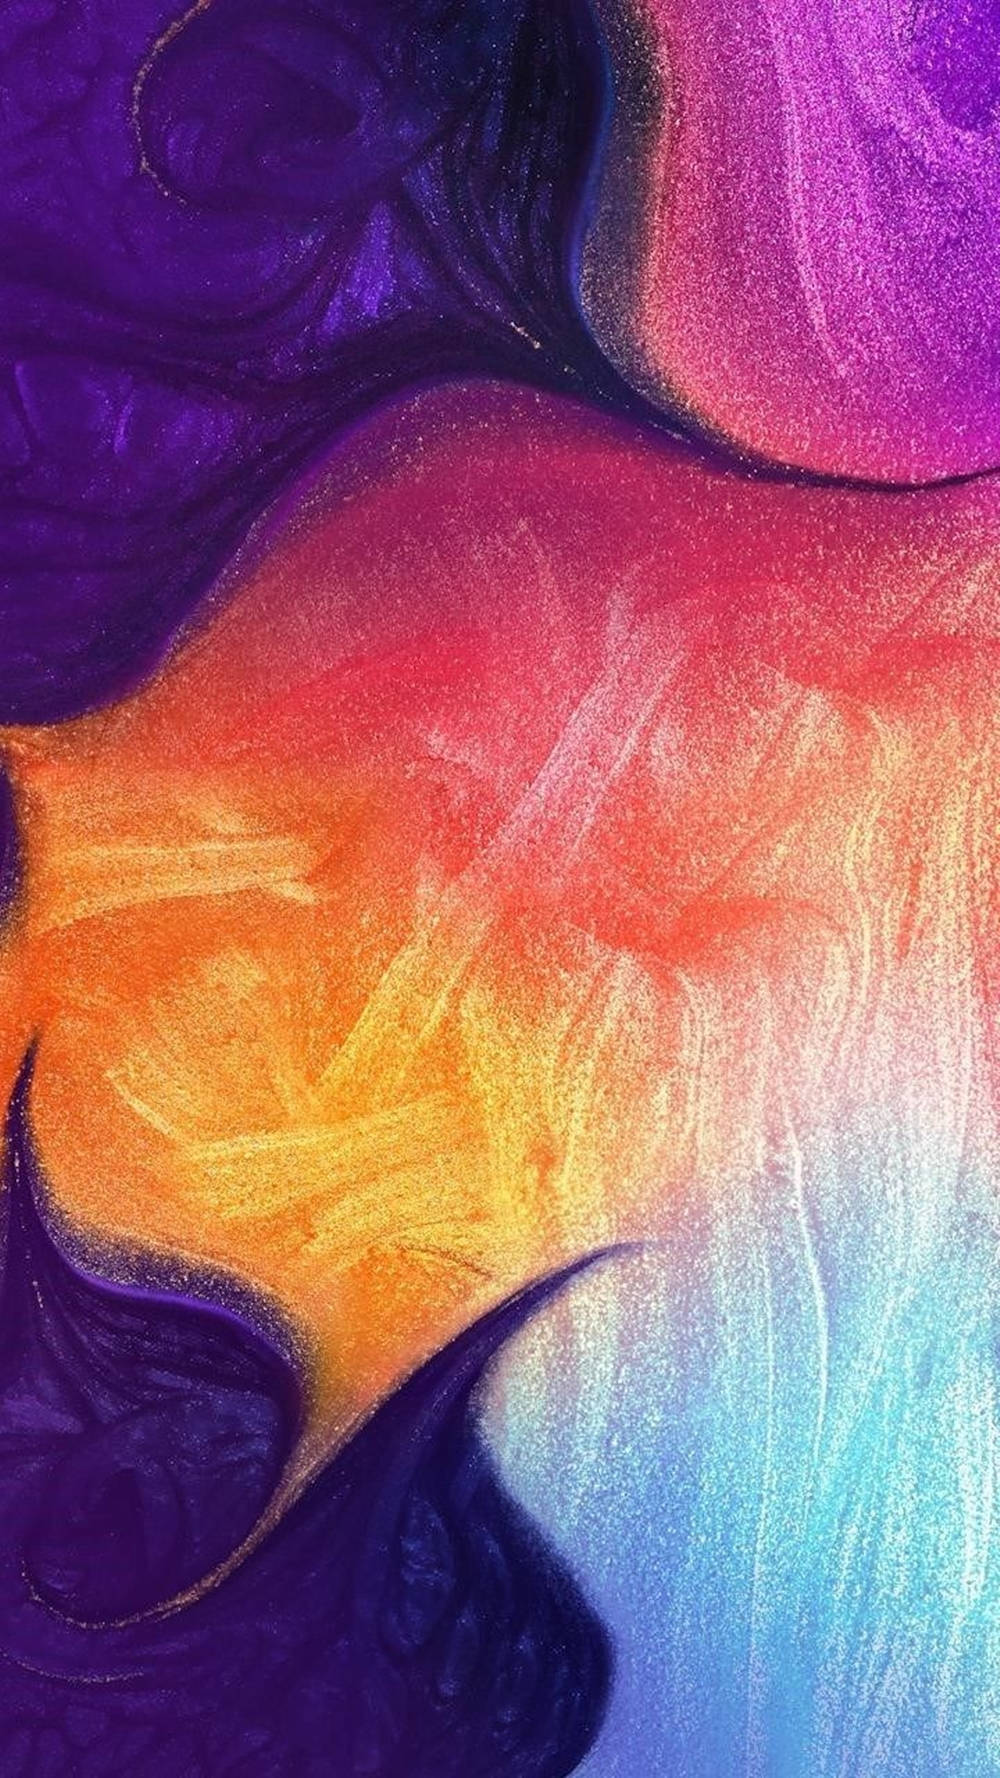  Samsung Galaxy A51 Hintergrundbild 1000x1778. Download Samsung A51 Rainbow Aesthetic Waves Painting Wallpaper